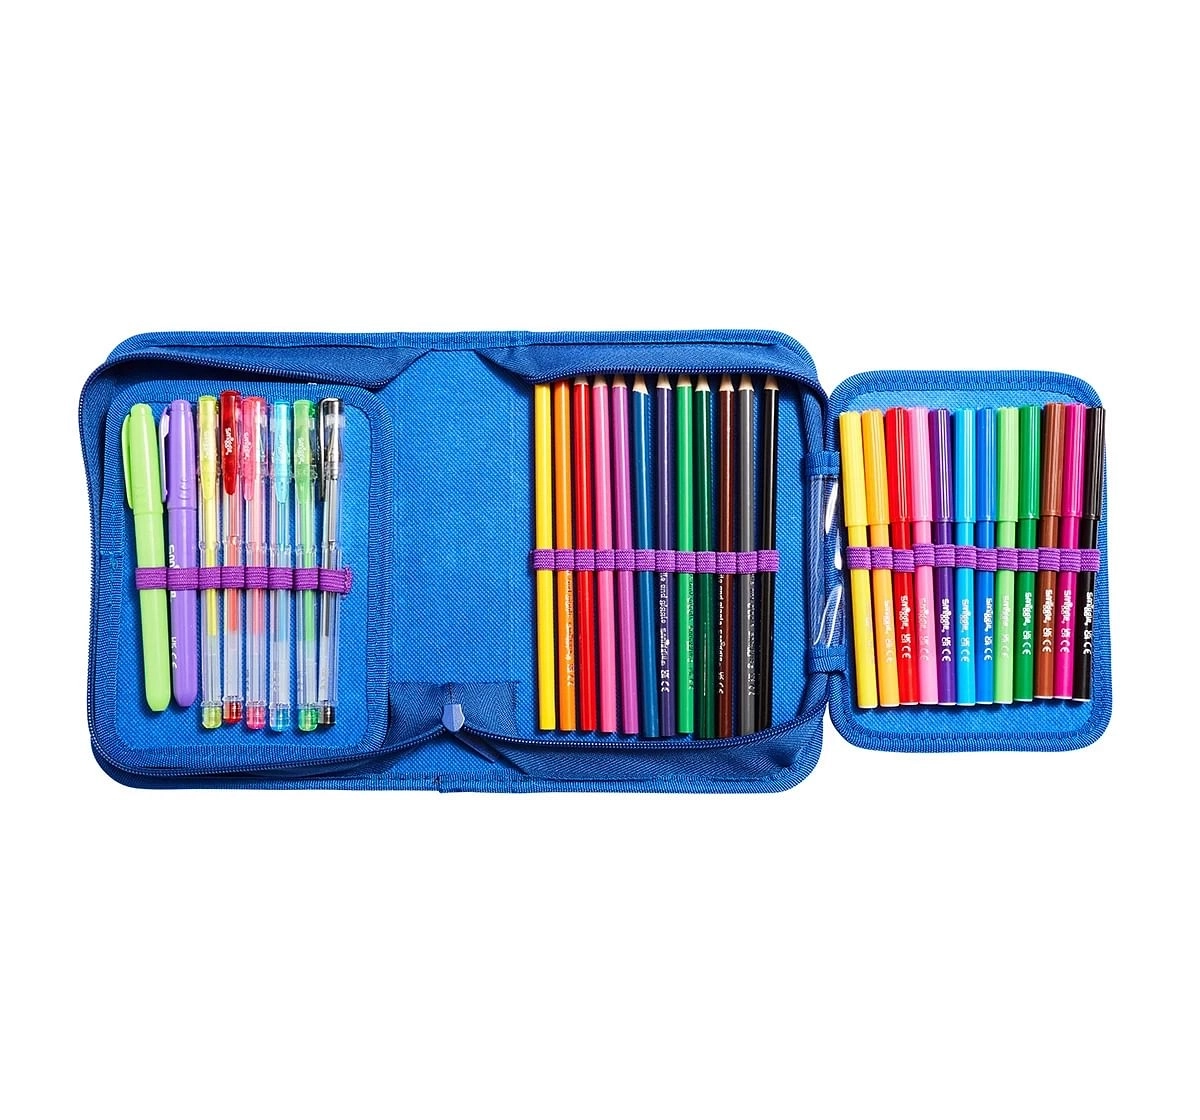 Smiggle Bright Side Midi Stationery Kit for Kids 3Y+, Blue